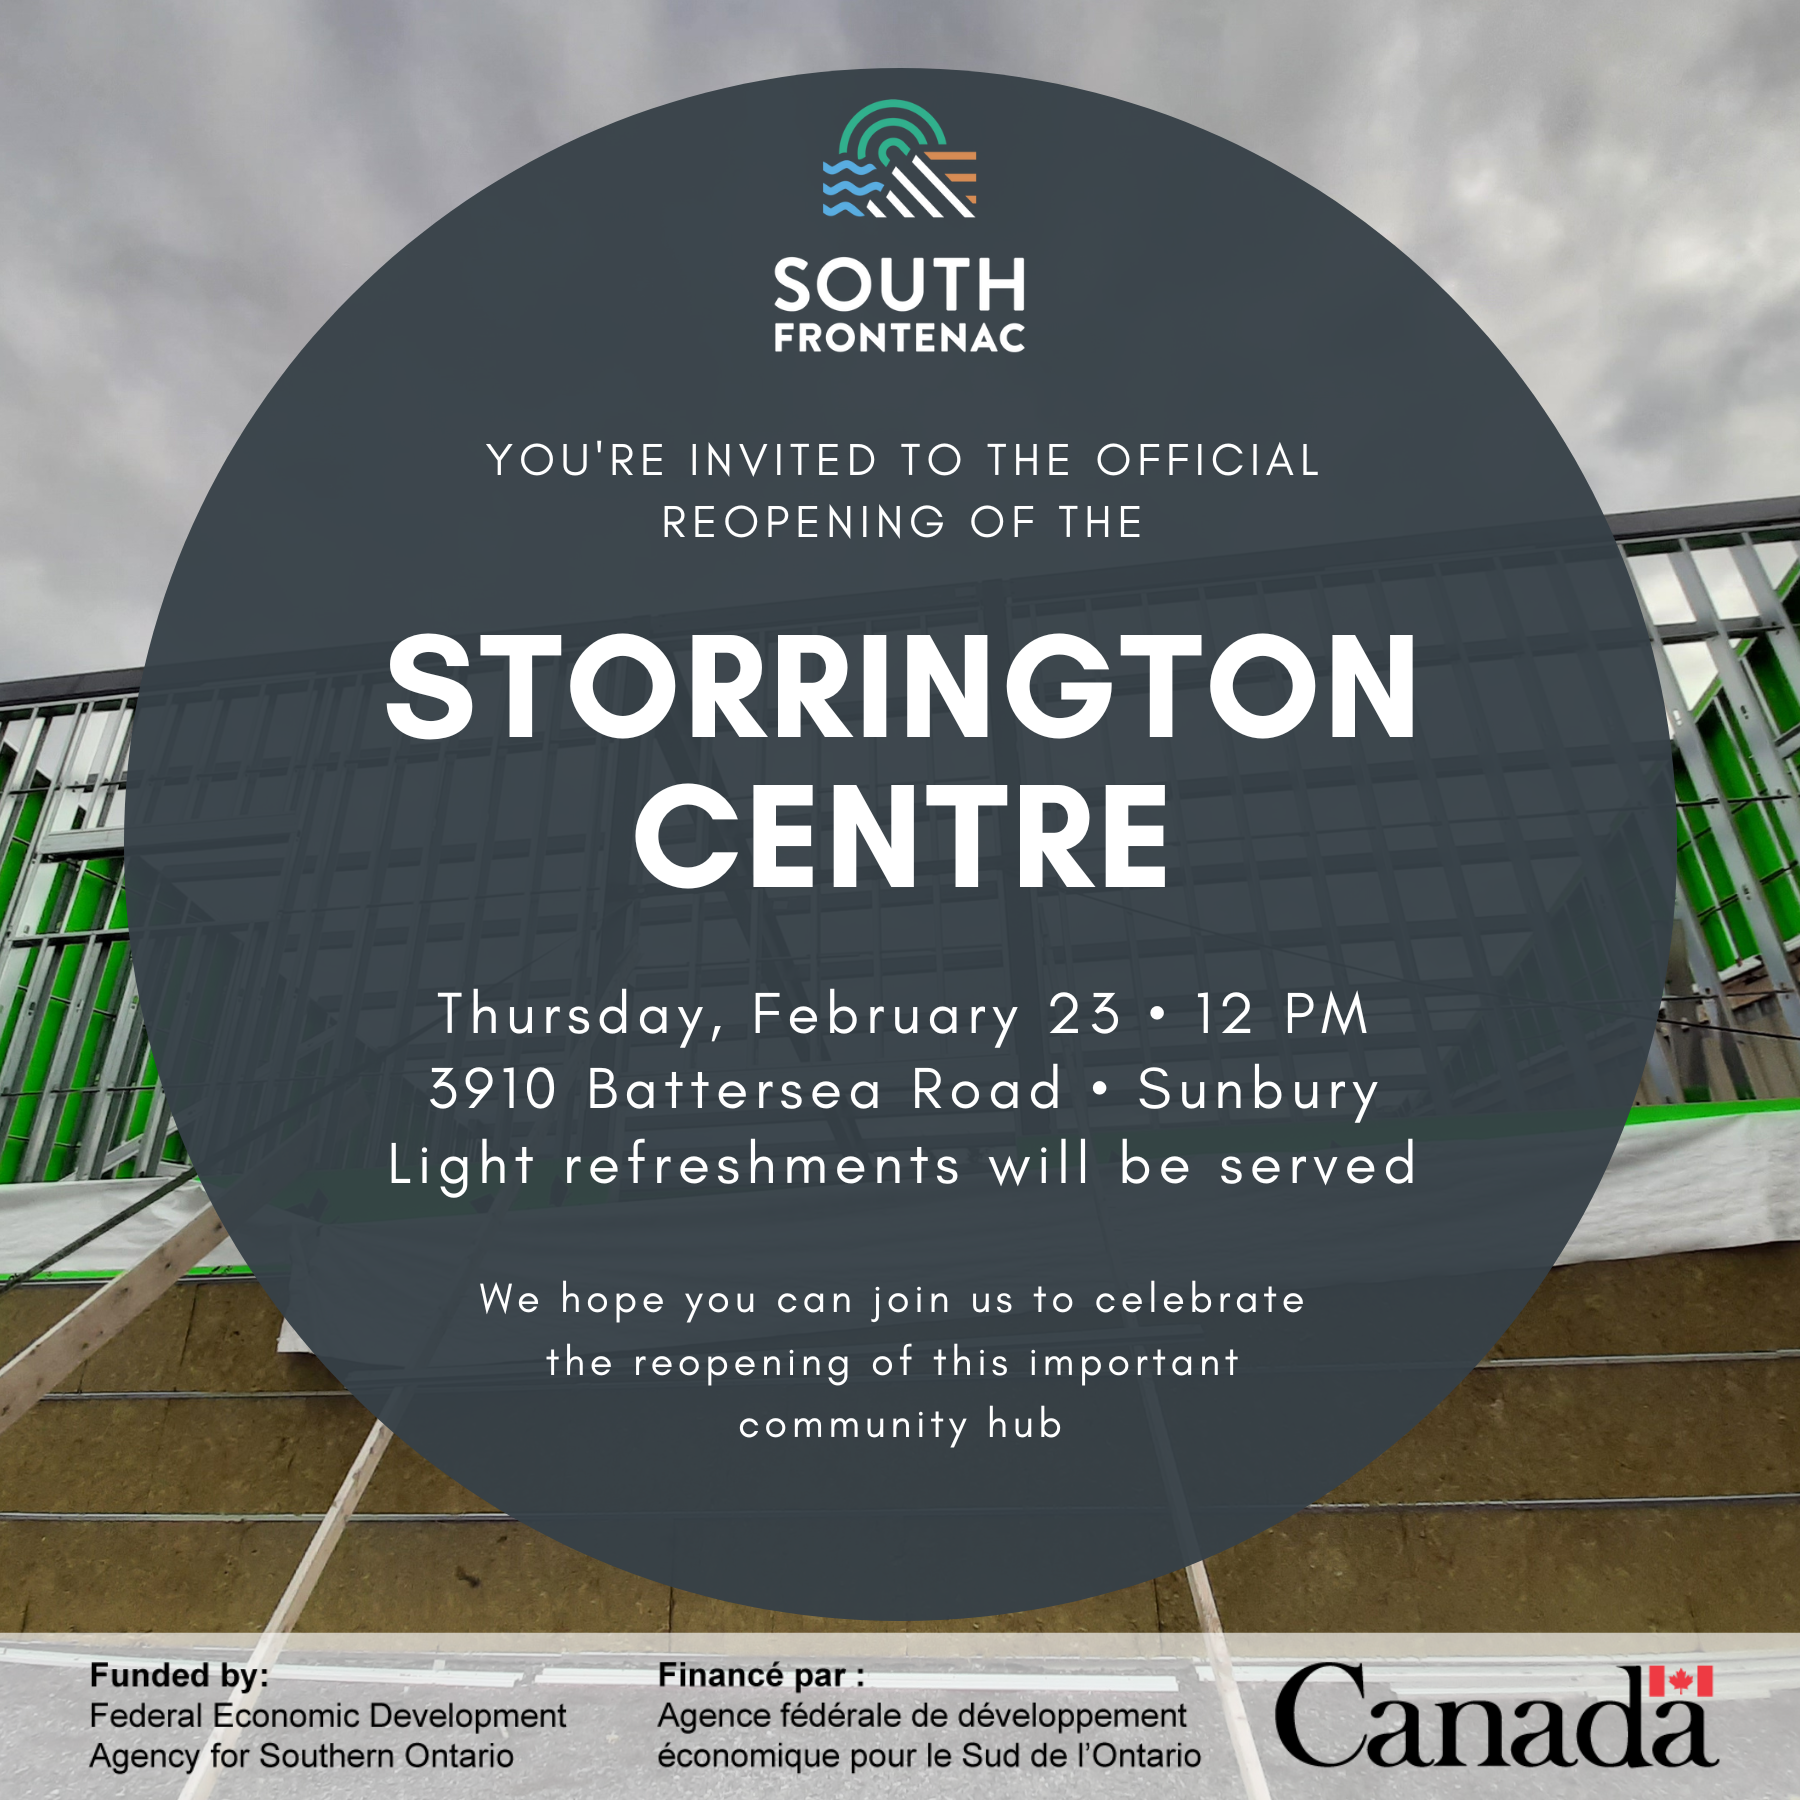 Storrington Centre invite